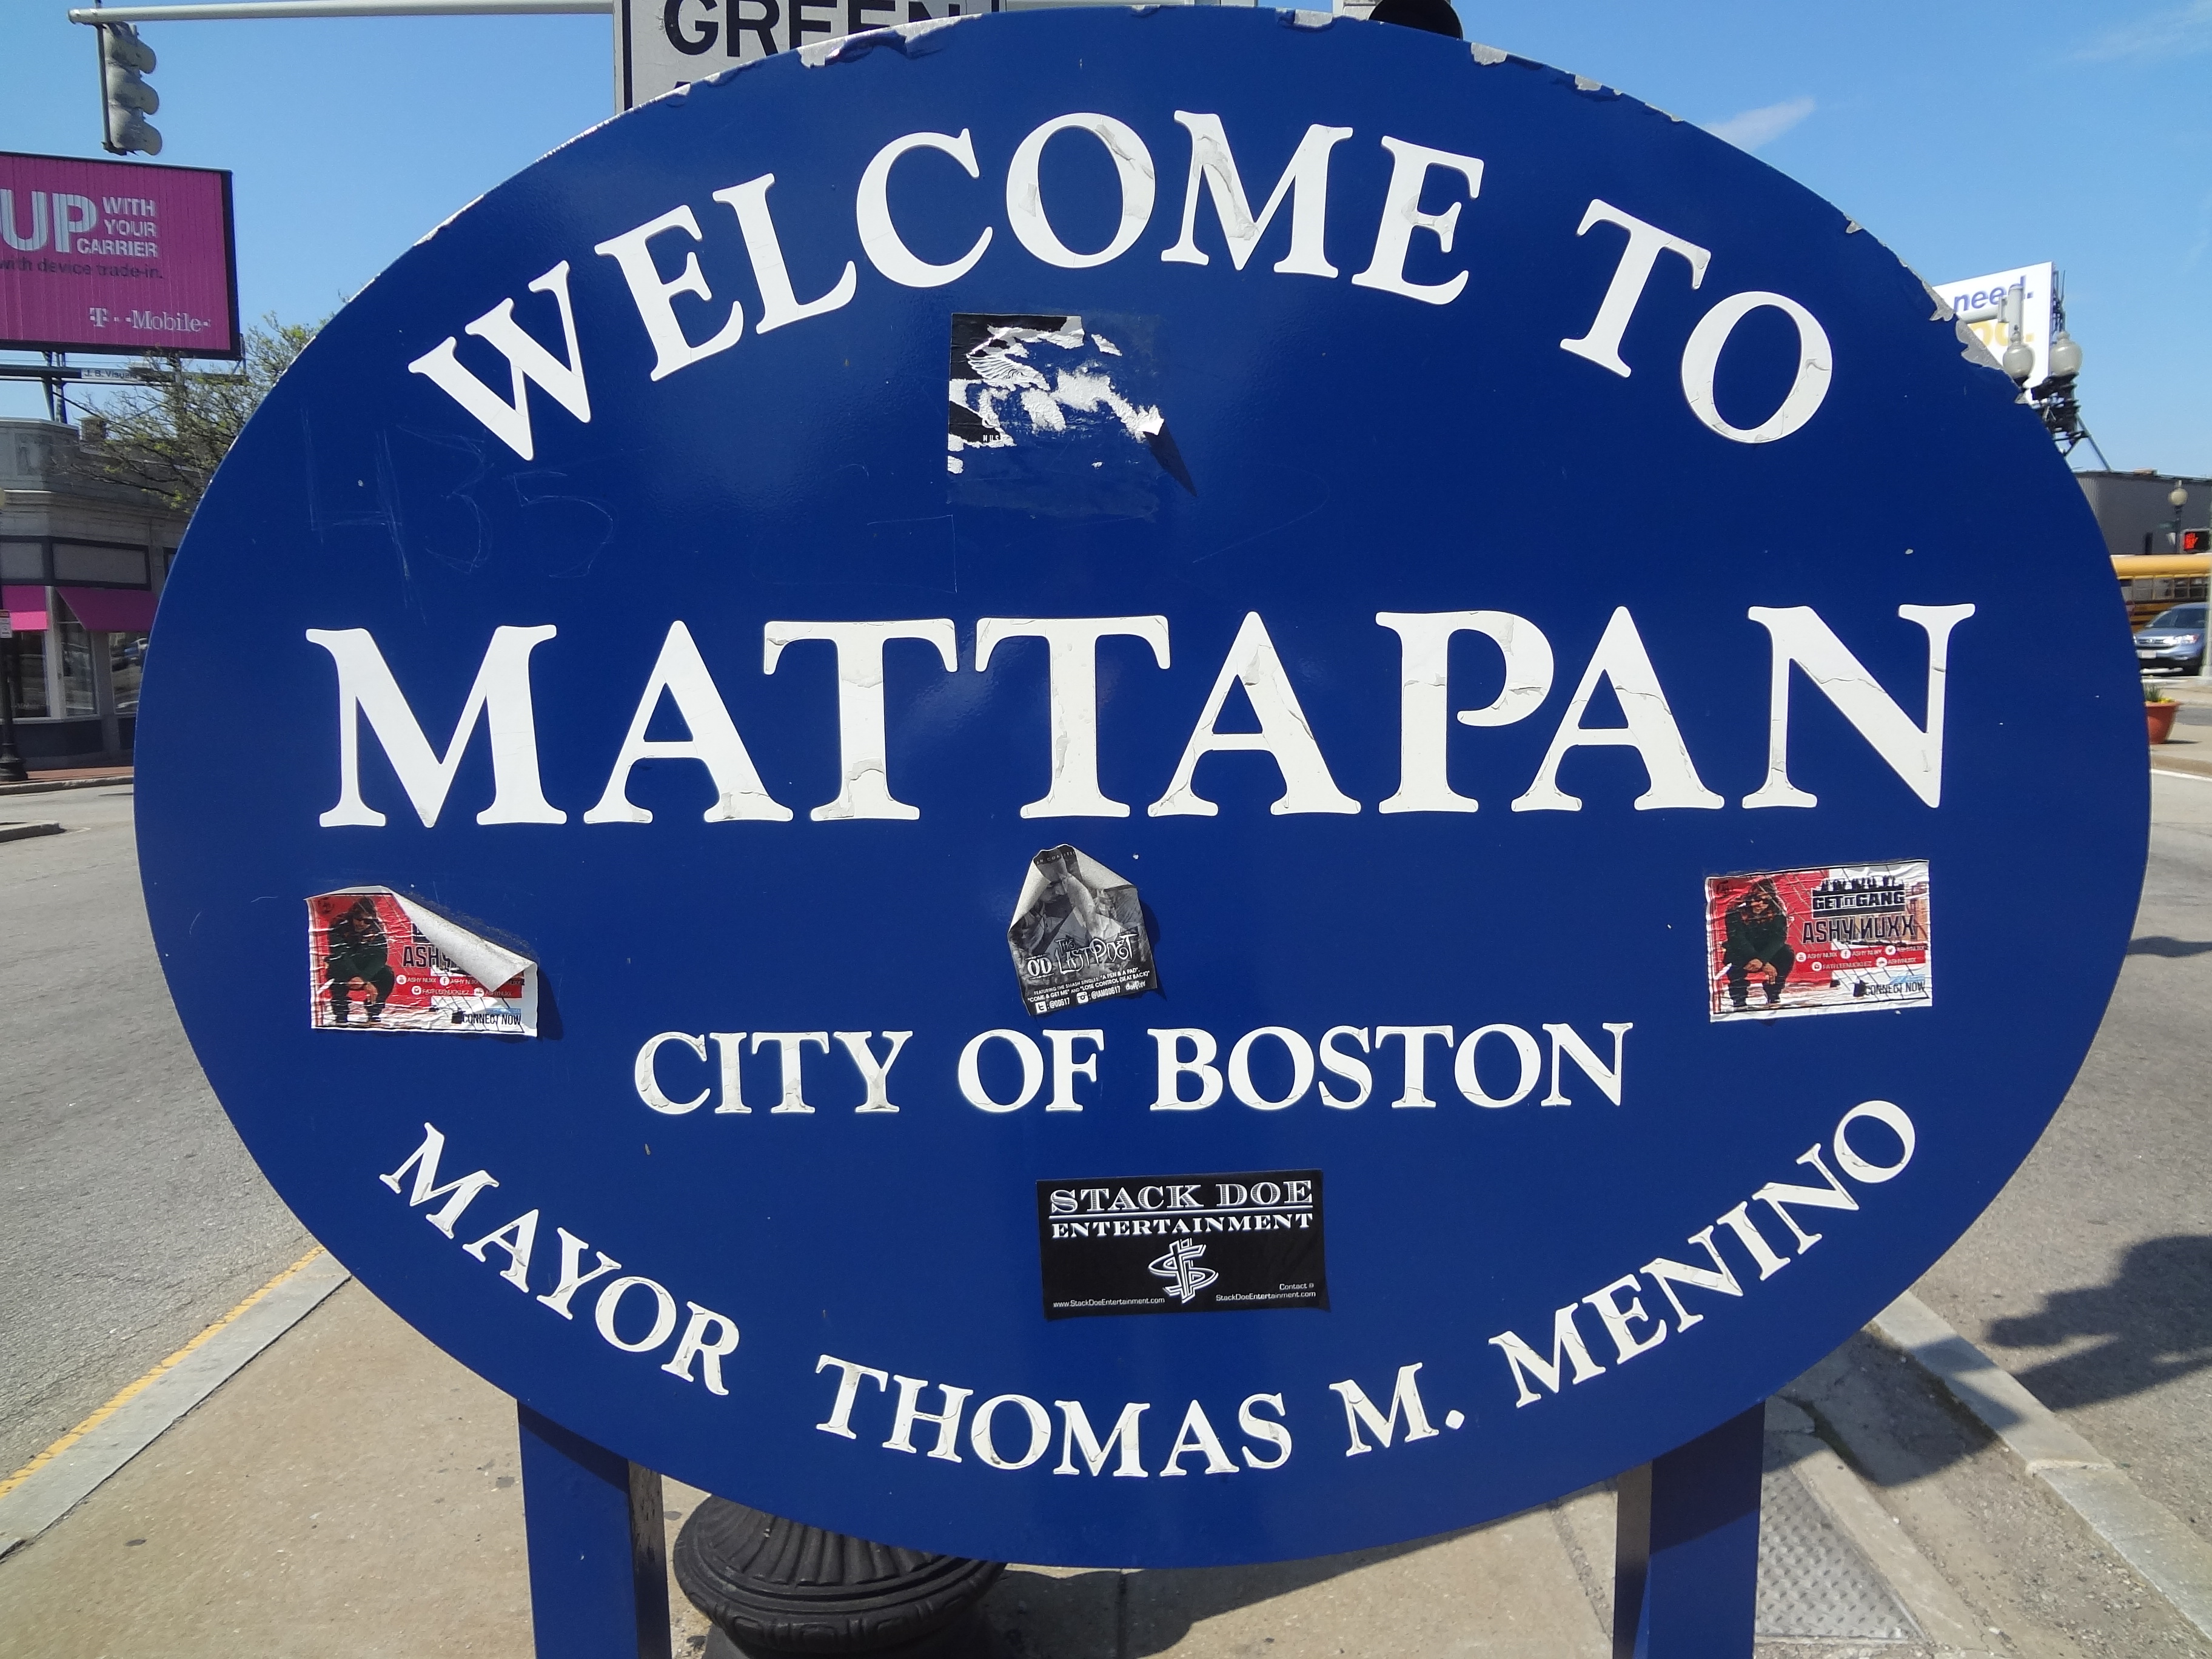 Welcome to Mattapan